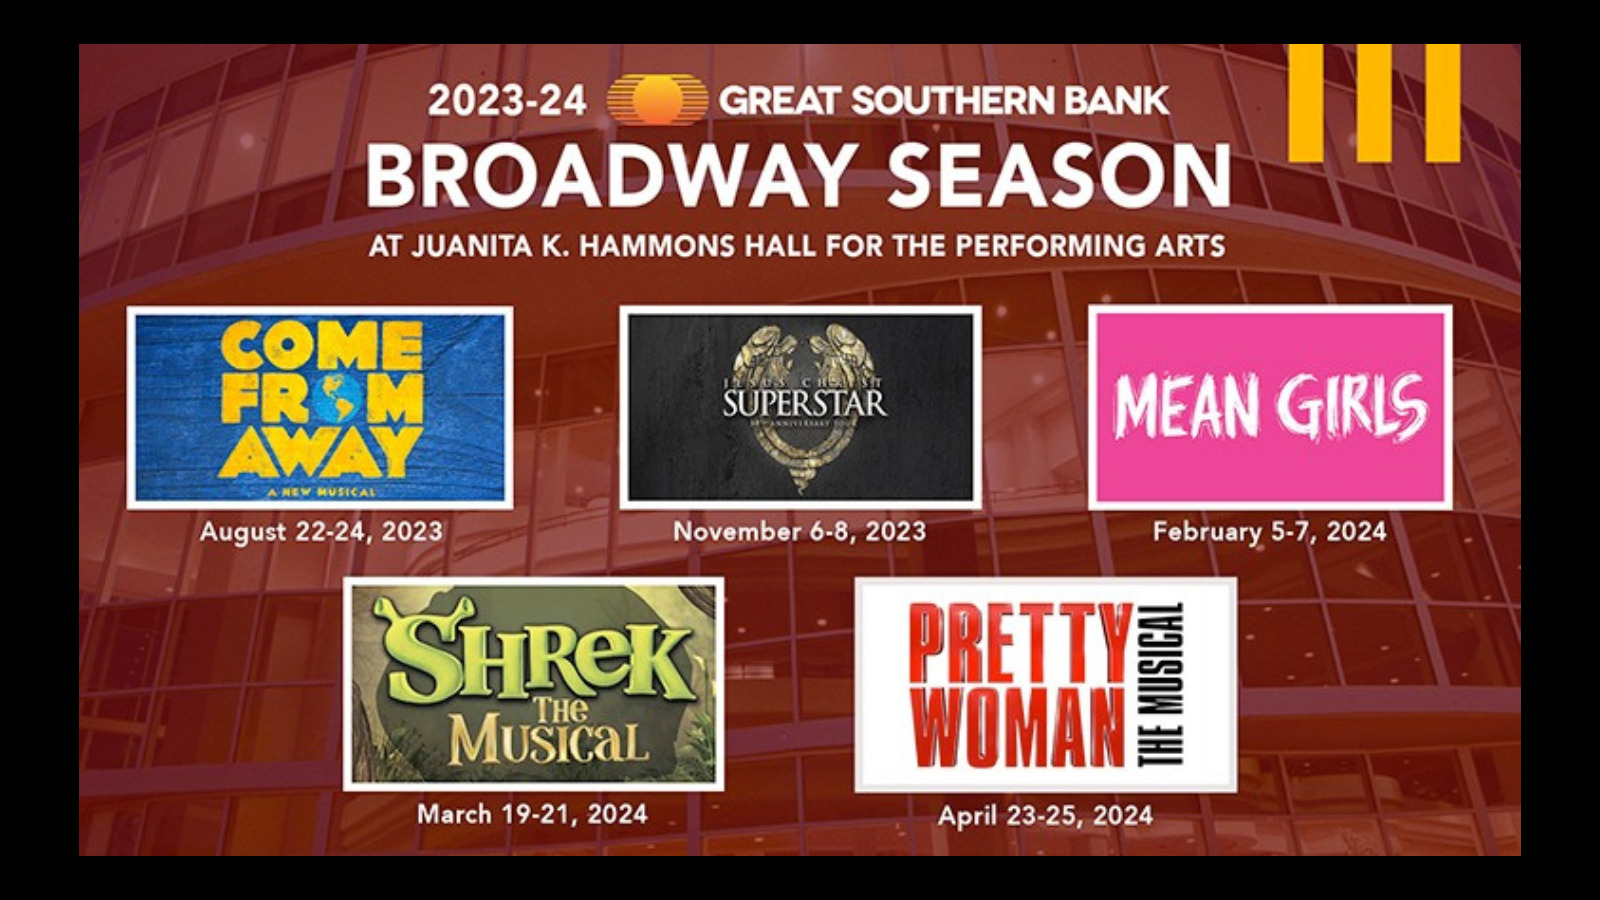 20232024 Broadway Season at Great Southern Bank Arena Announced